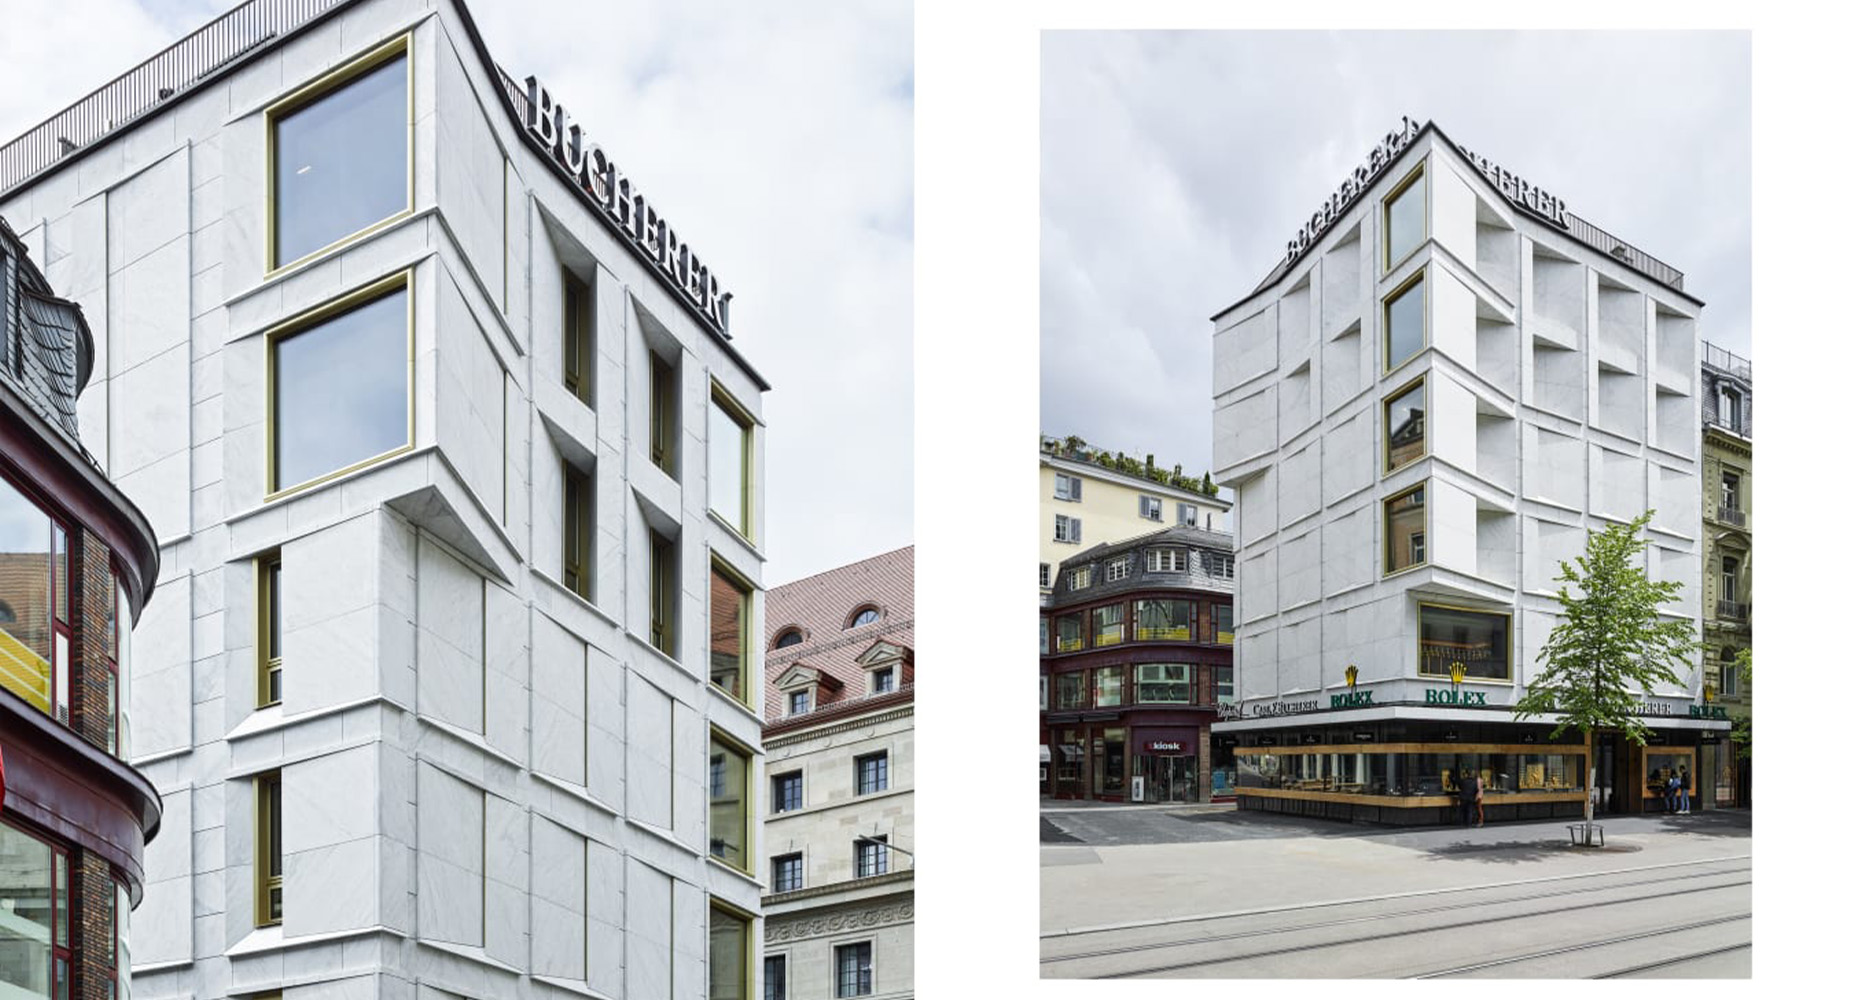 Bucherer's boutiques include a building in Zurich with a unique Rolex store concept.